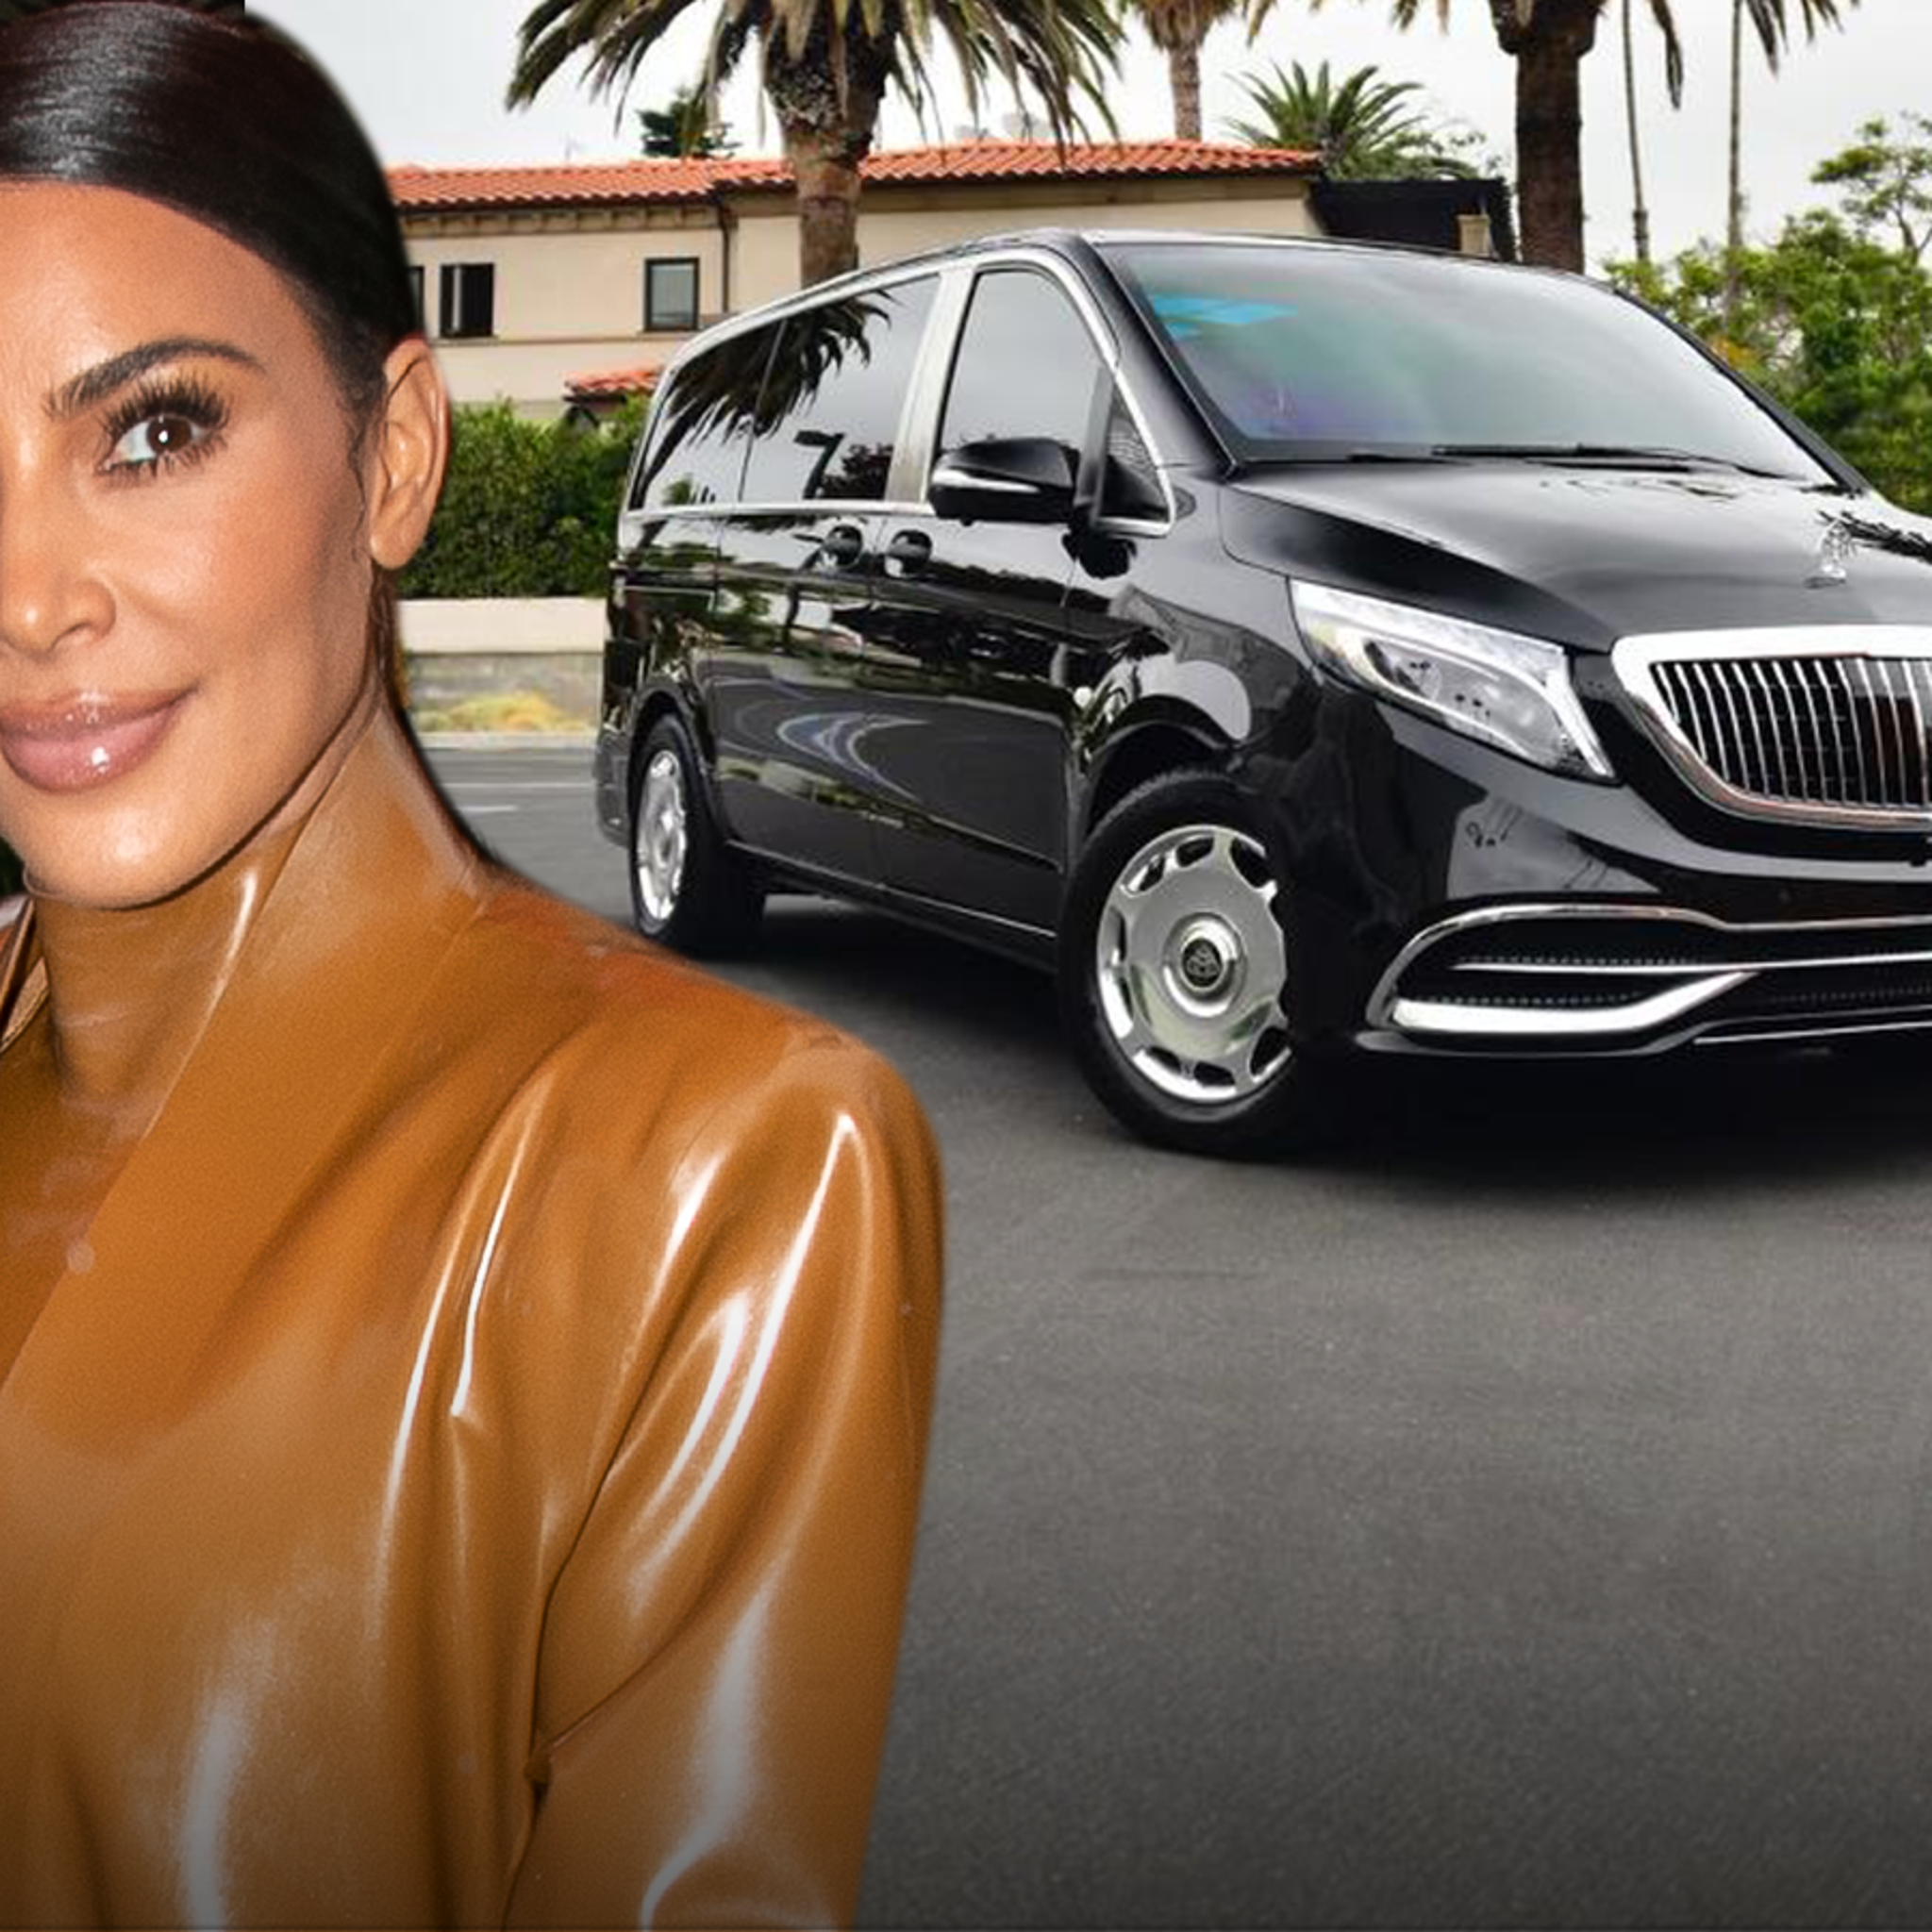 Kim Kardashian Buys $400K Luxury Maybach Minivan to Shuttle Kids